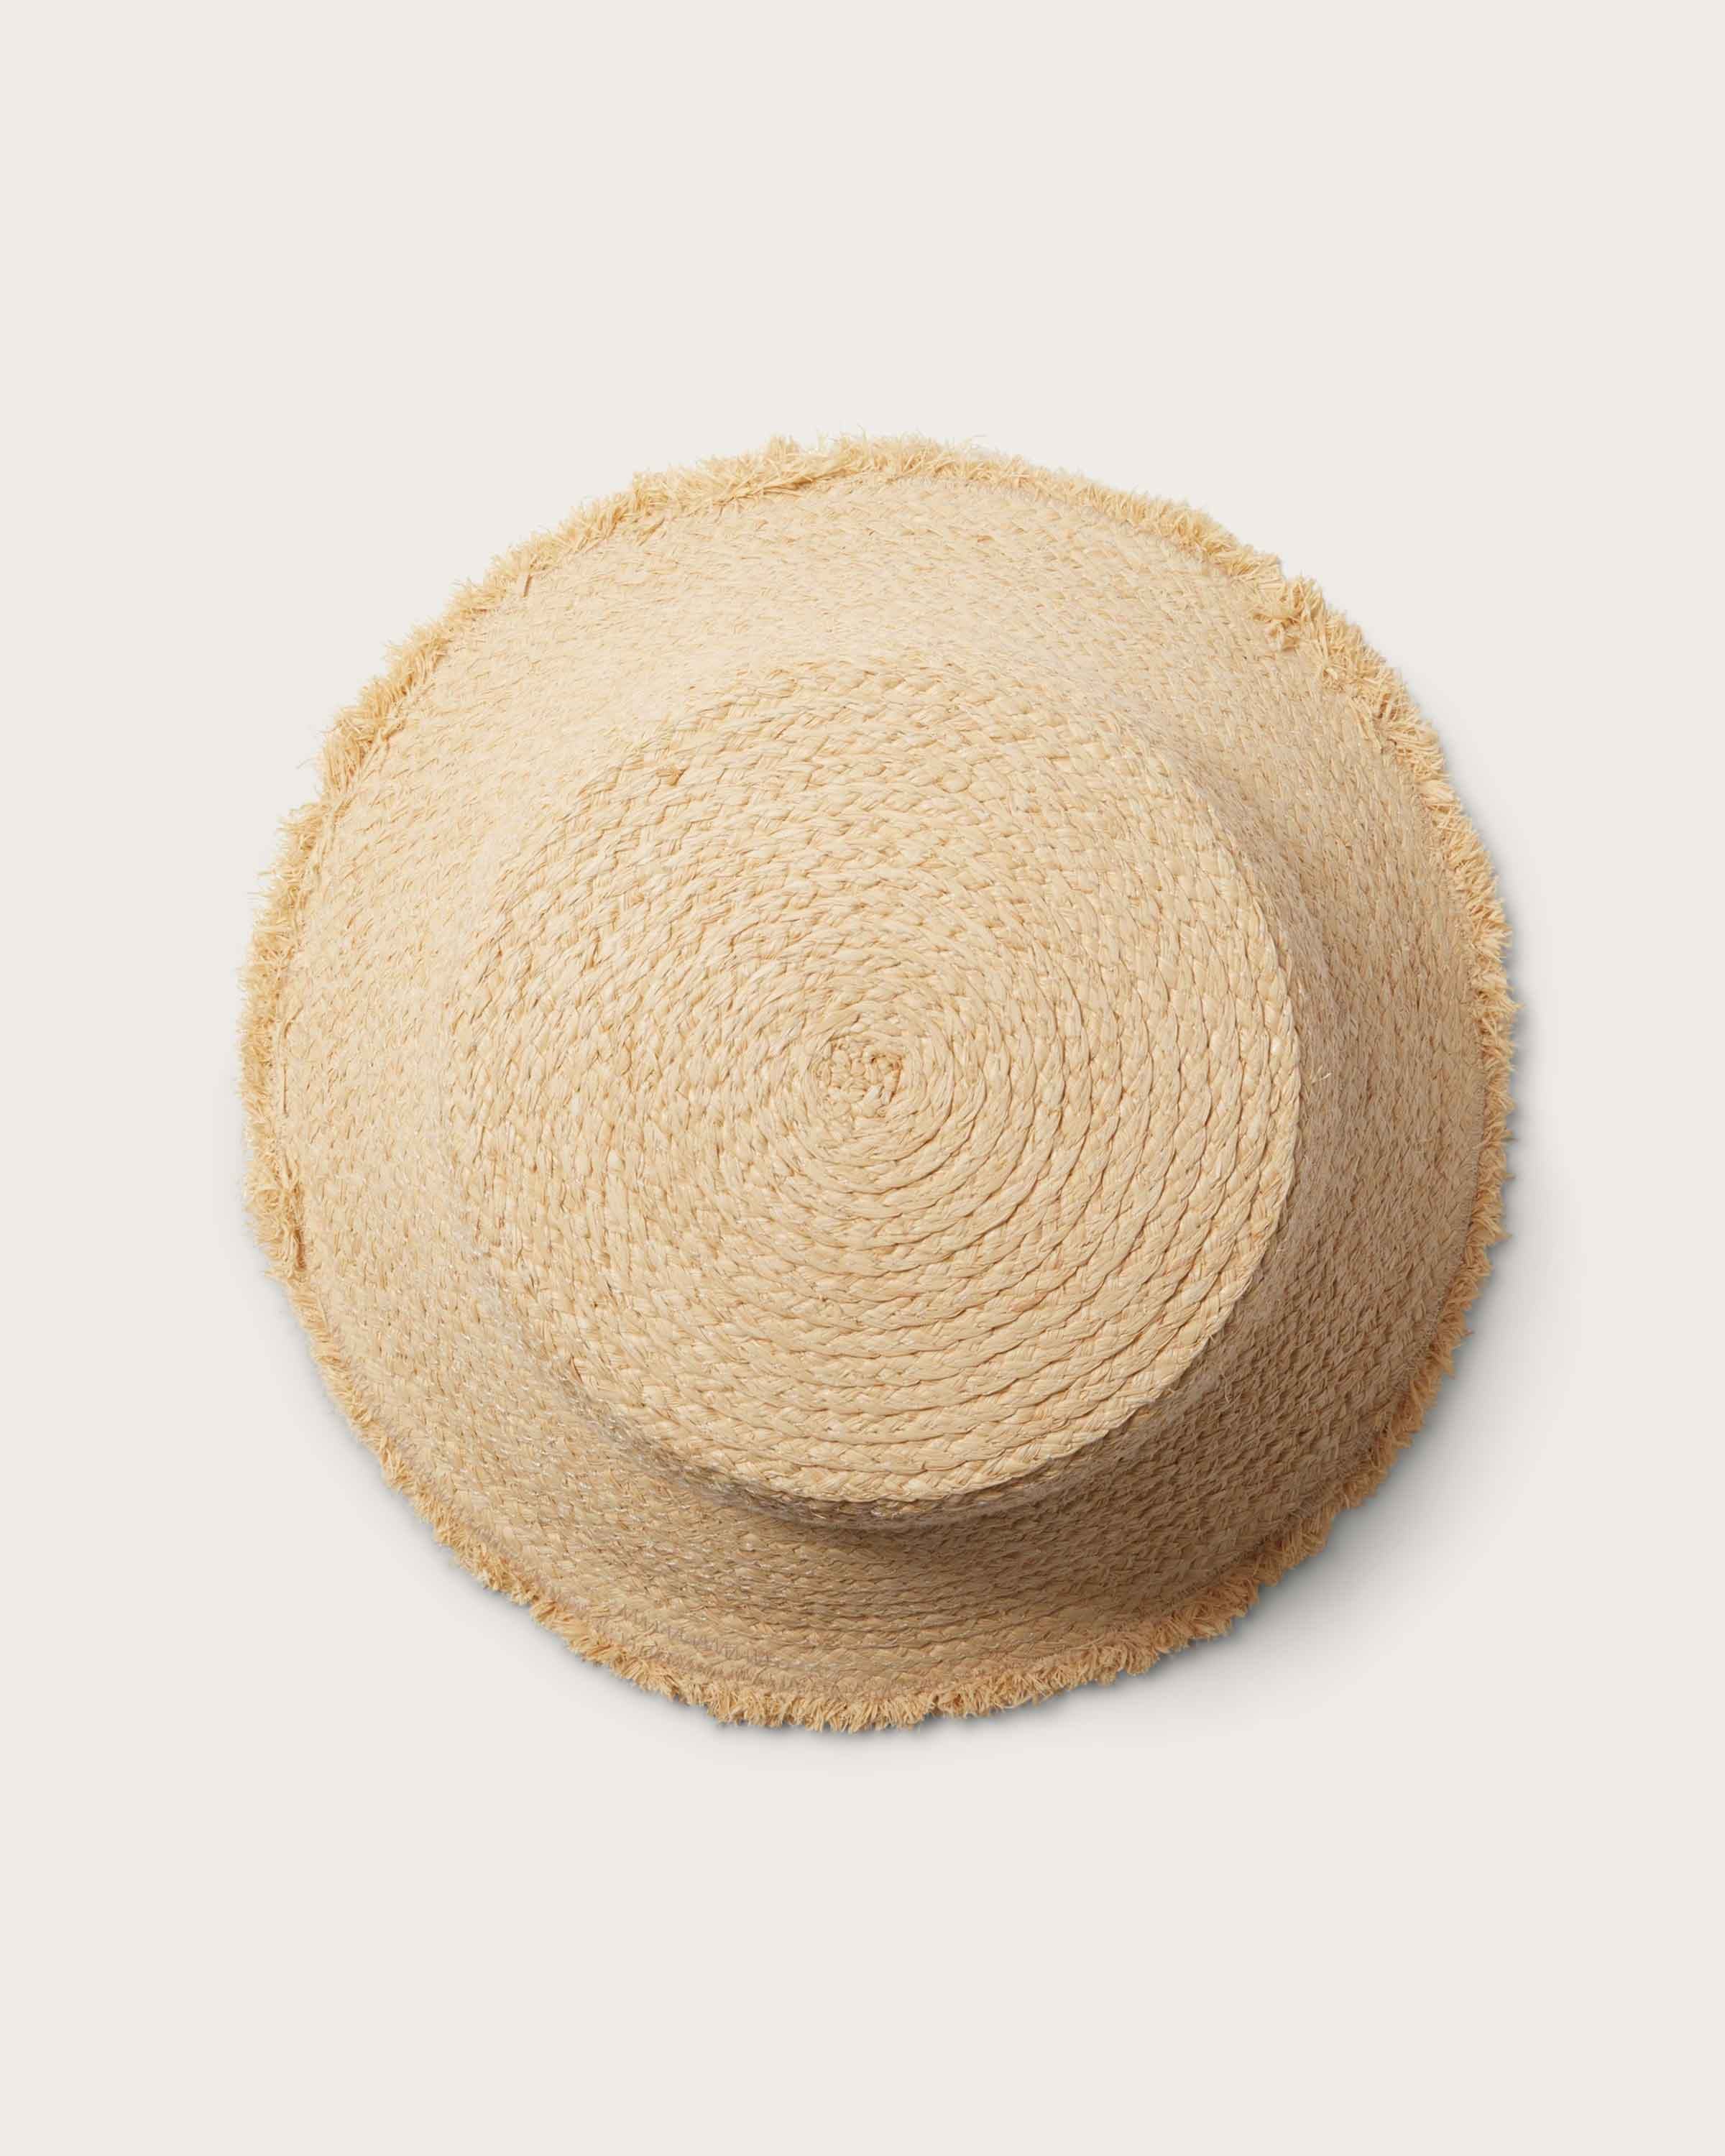 Lenny Bucket in Natural - undefined - Hemlock Hat Co. Straw Bucket Hats